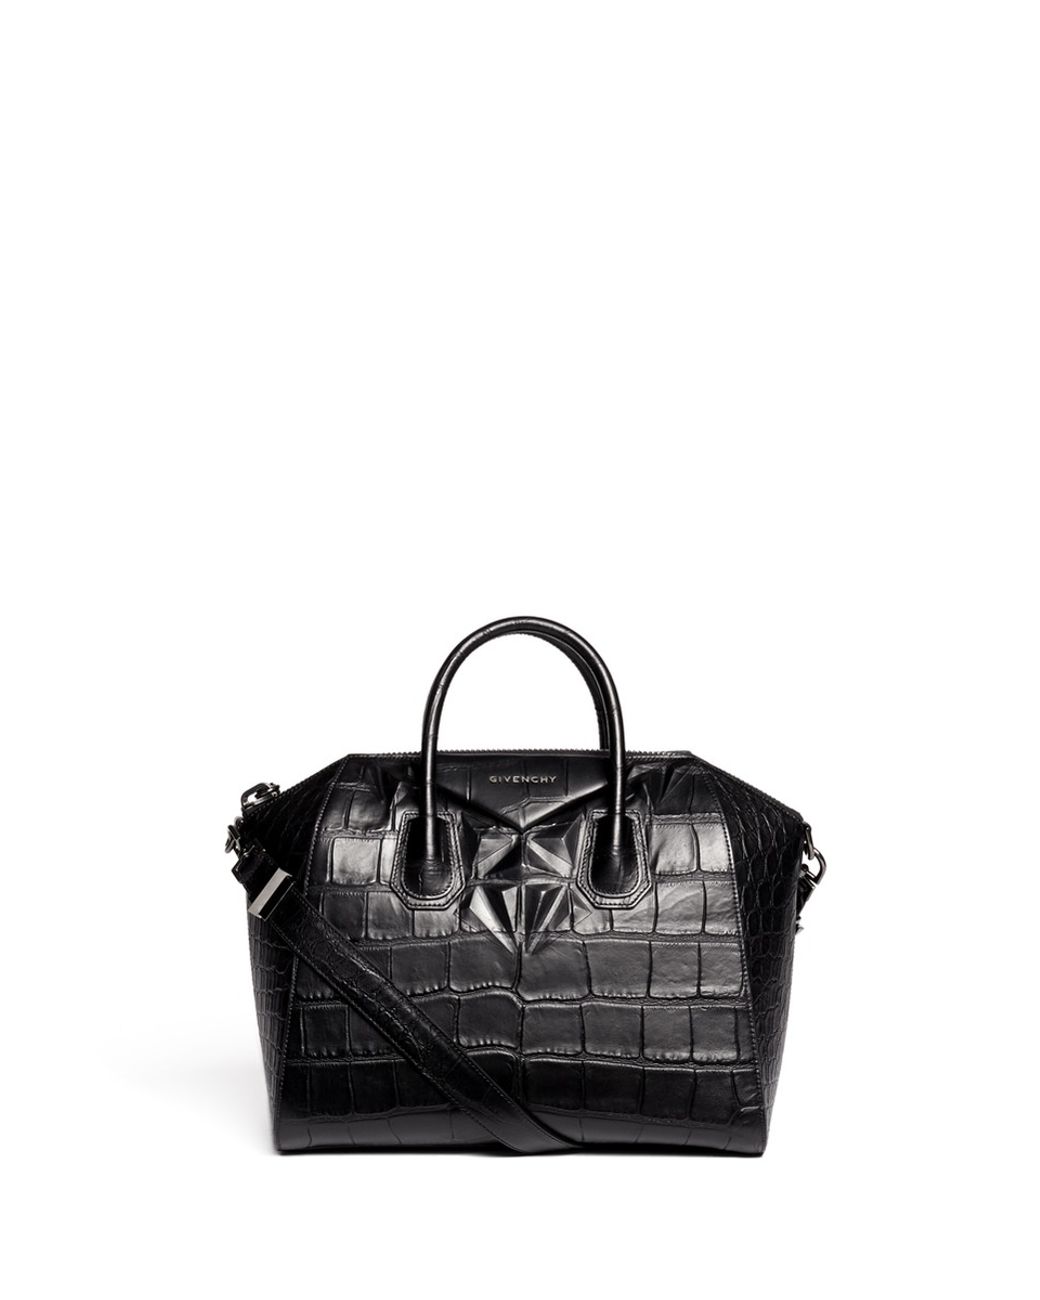 Givenchy Antigona Medium Croc Embossed Leather Satchel in Black | Lyst